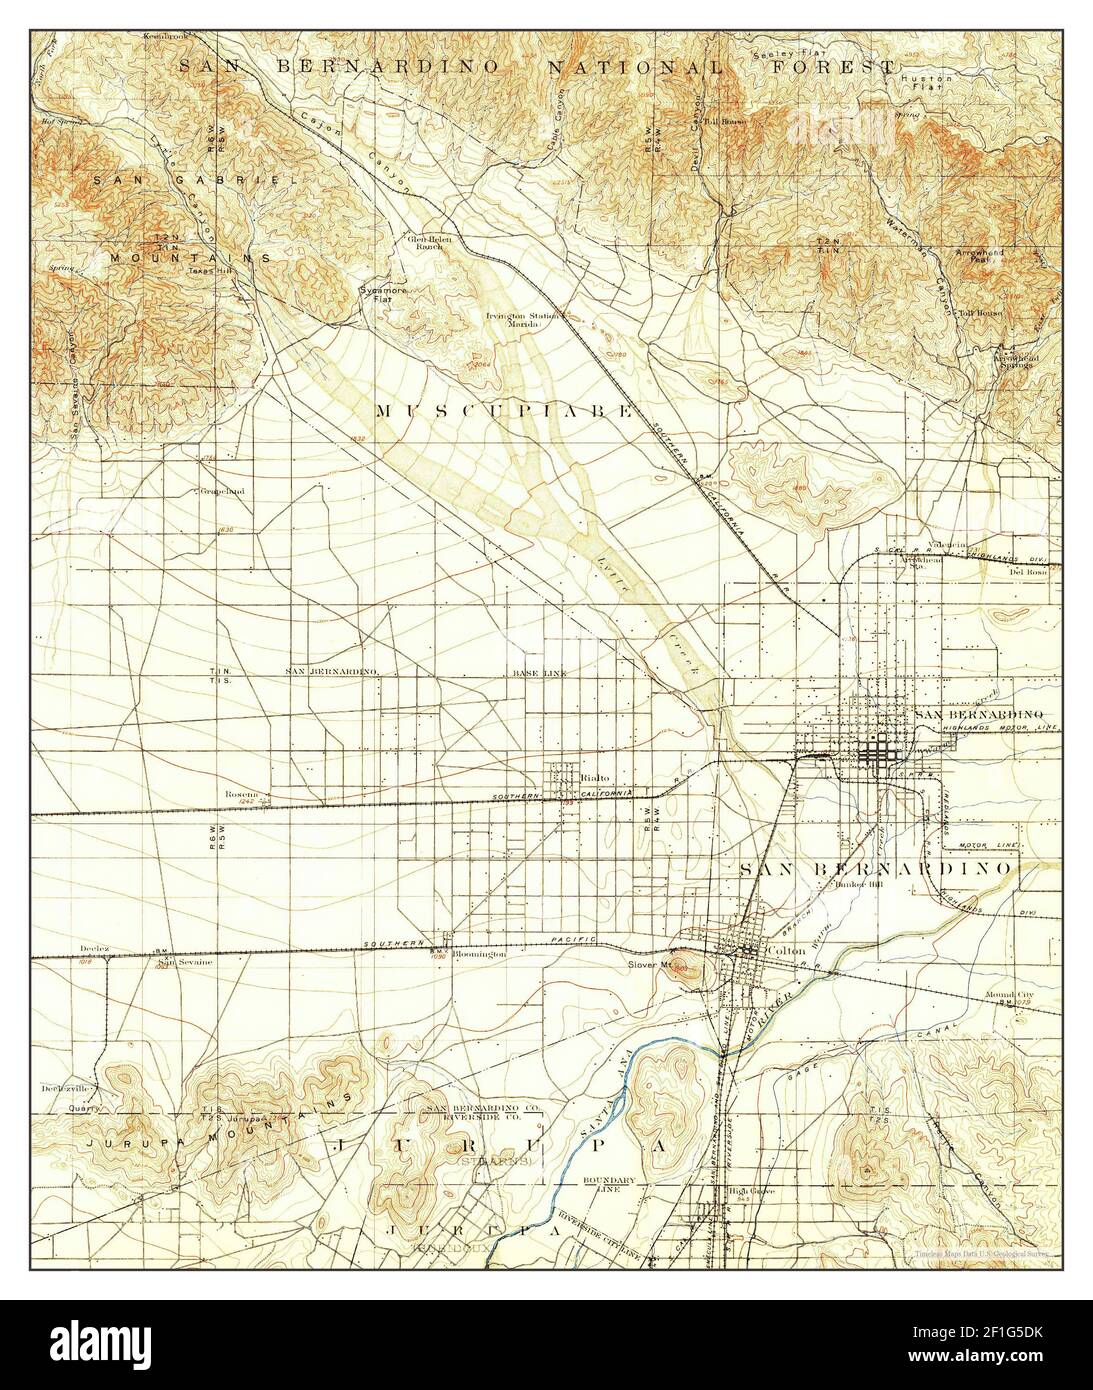 San Bernardino, California, map 1901, 1:62500, United States of America by Timeless Maps, data U.S. Geological Survey Foto Stock